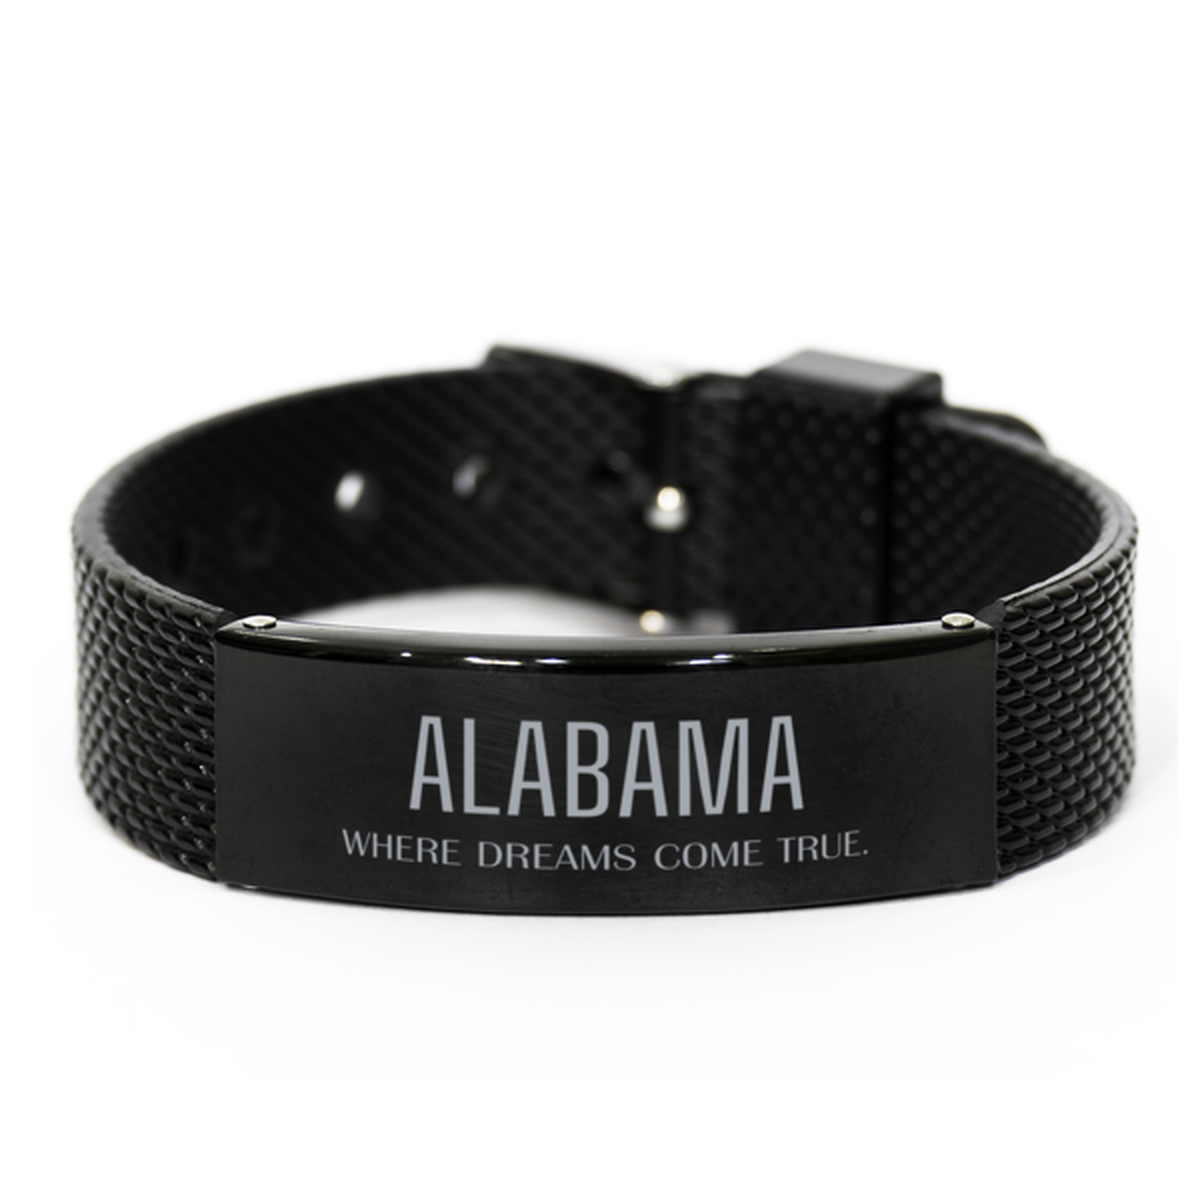 Love Alabama State Black Shark Mesh Bracelet, Alabama Where dreams come true, Birthday Inspirational Gifts For Alabama Men, Women, Friends